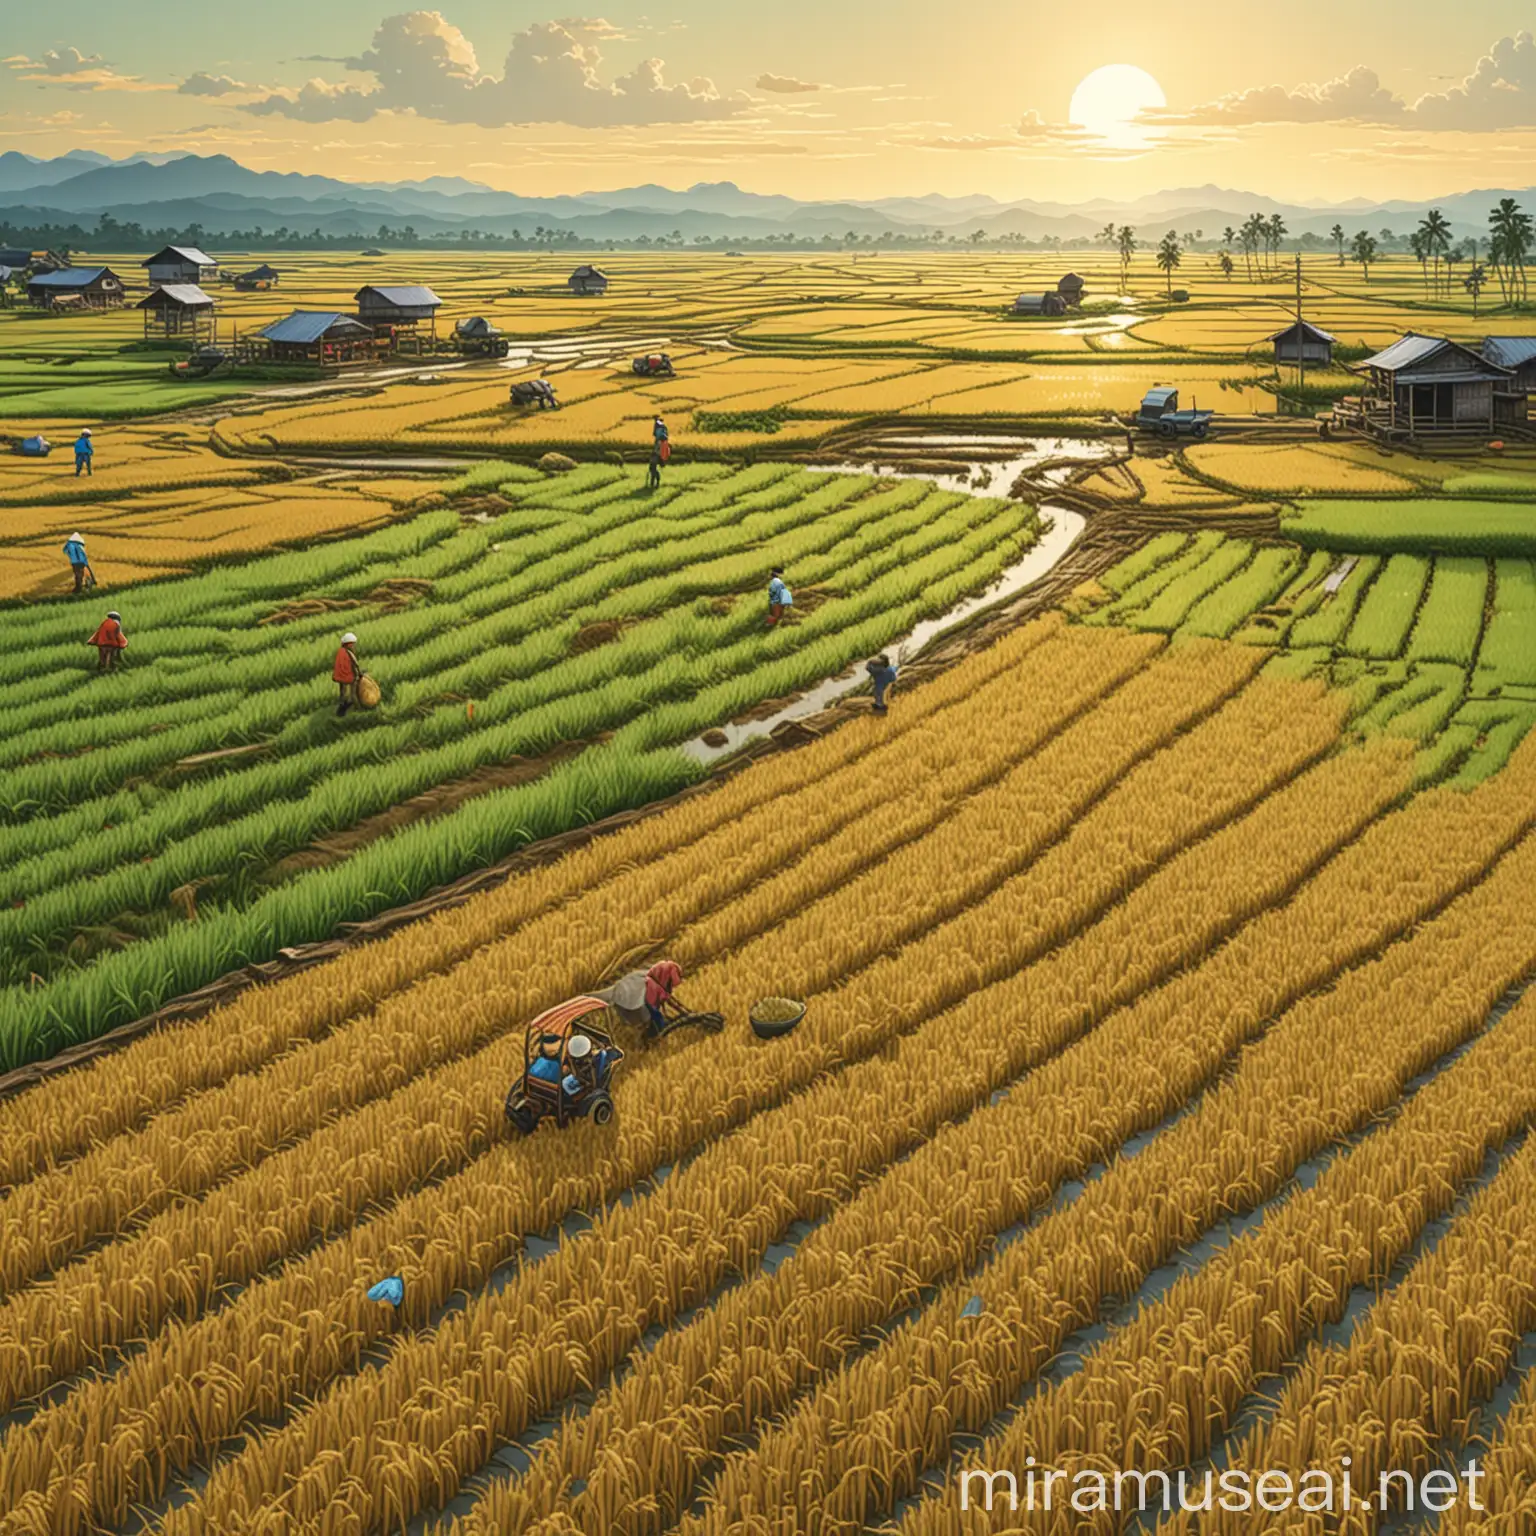 Harvesting Rice Fields Near and Far Views